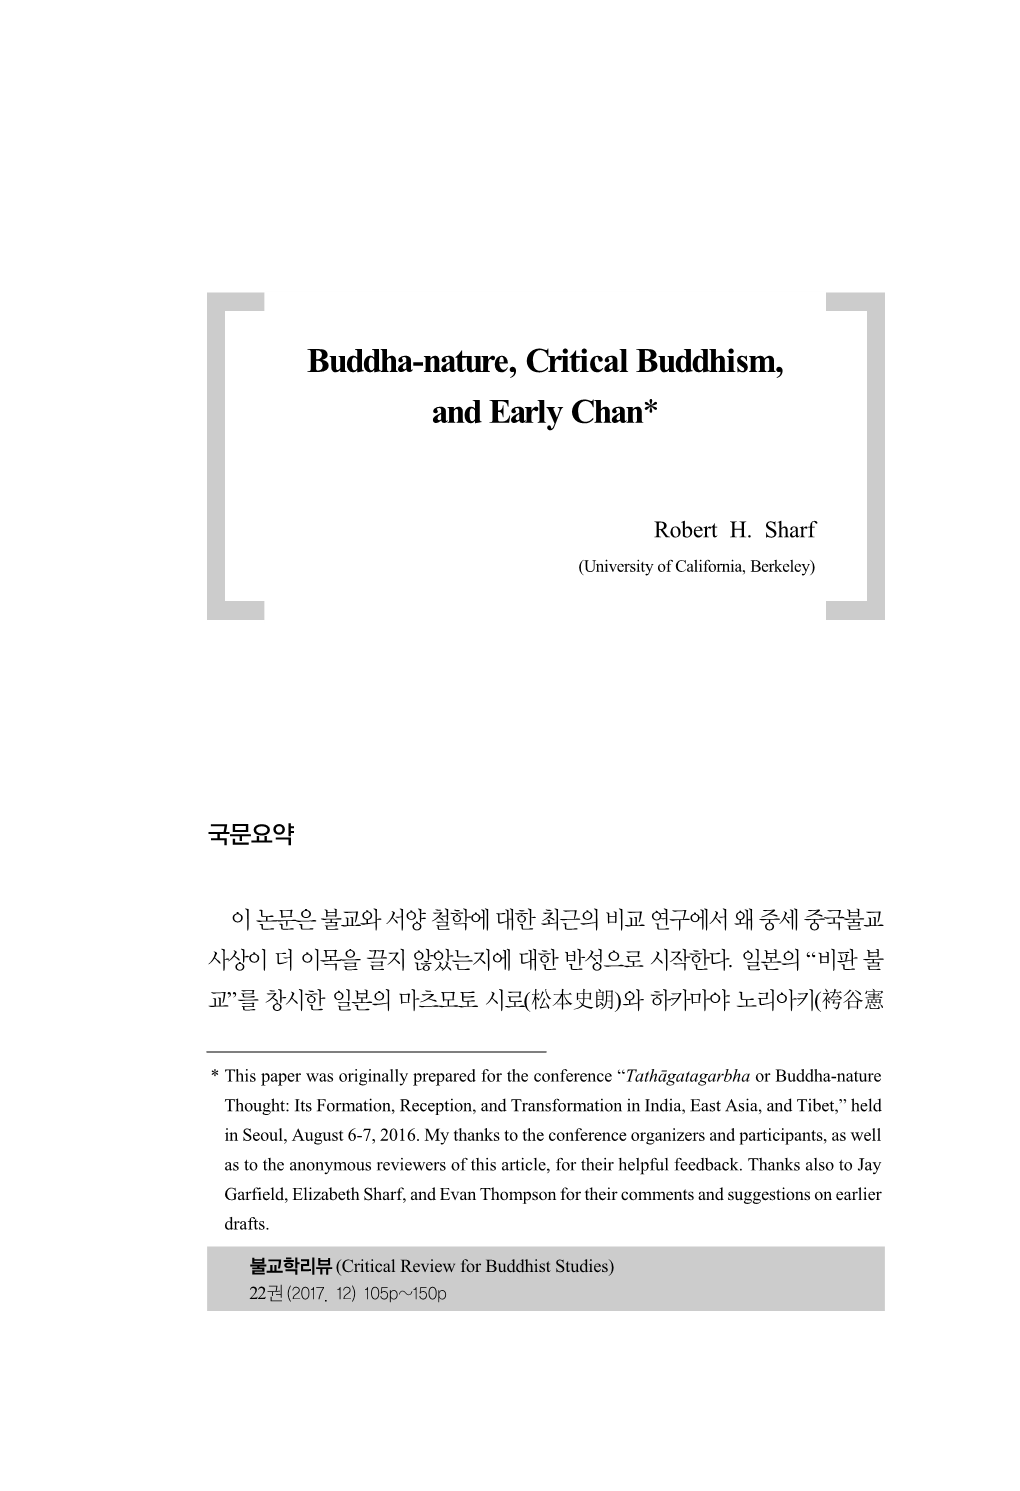 Buddha-Nature, Critical Buddhism, and Early Chan*